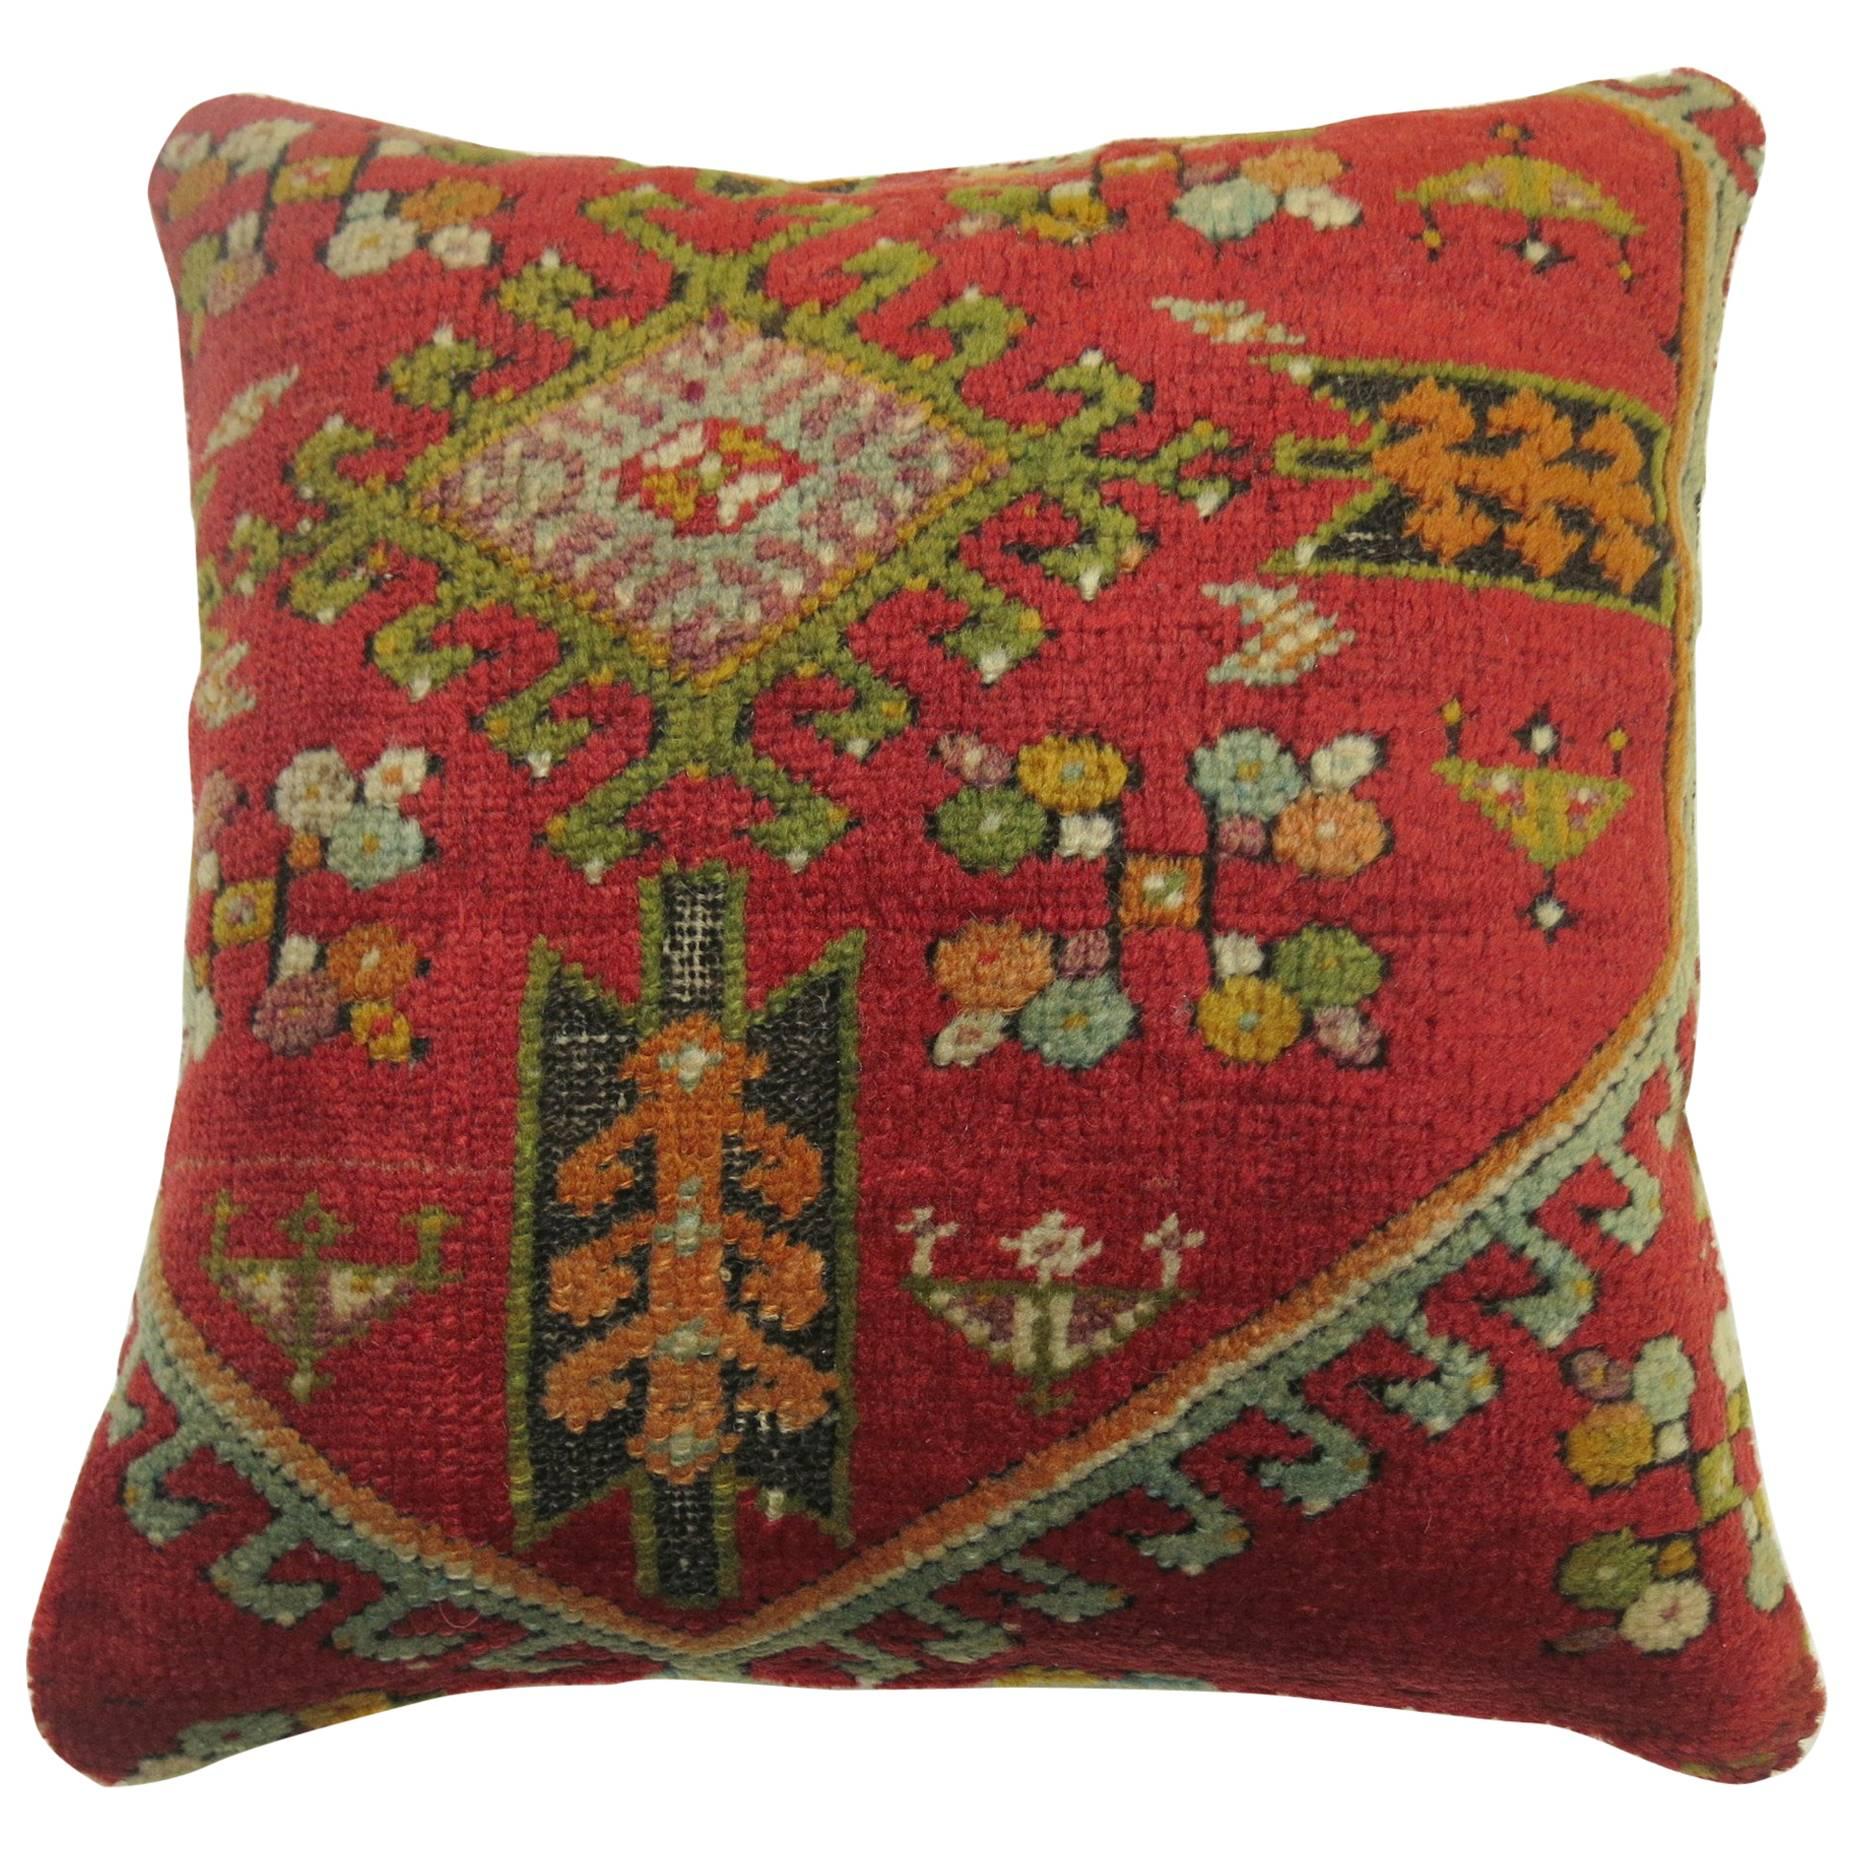 Antique Turkish Pillow